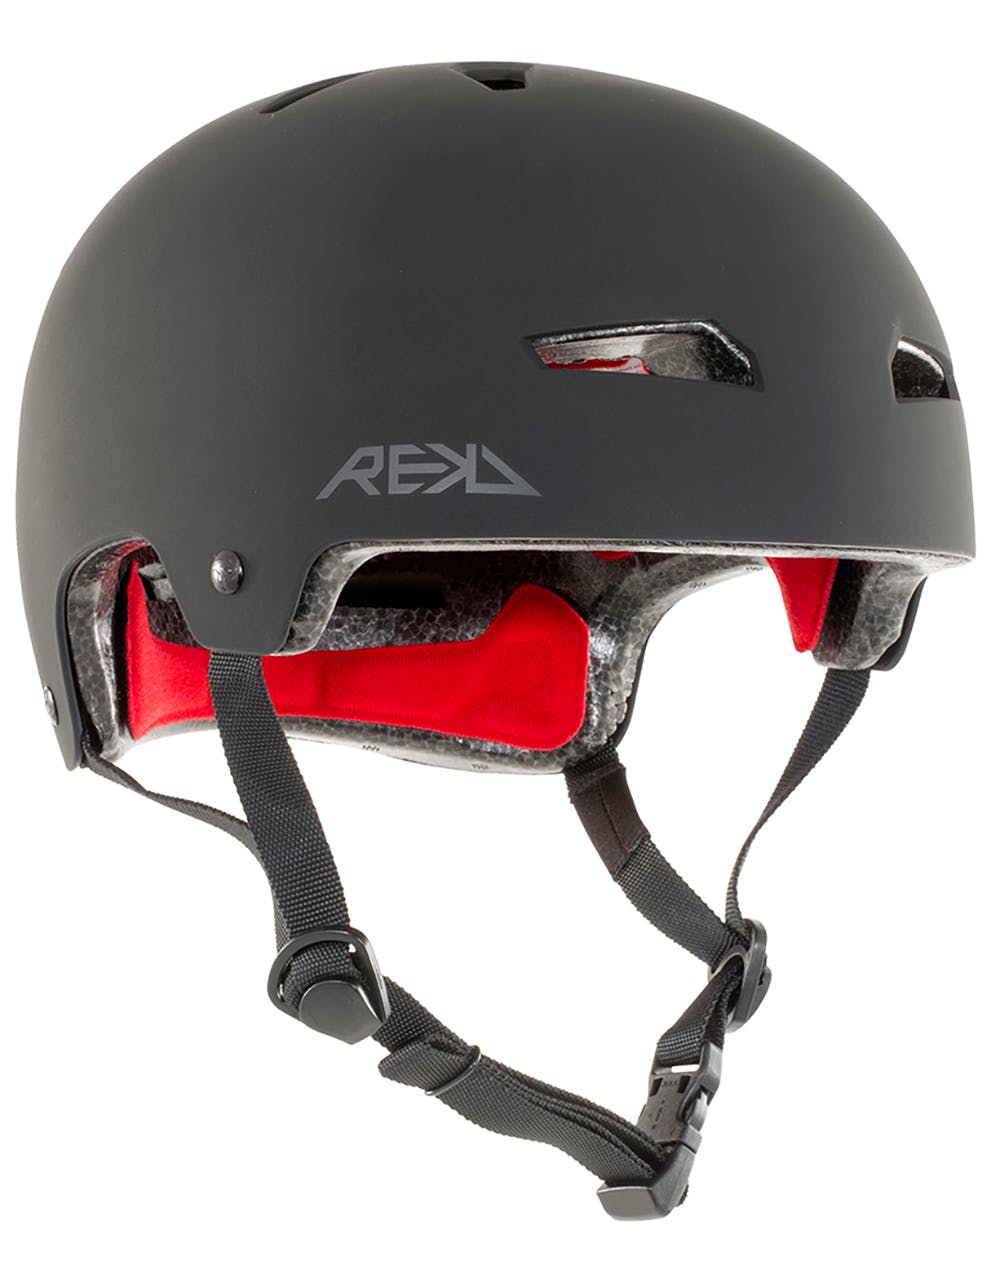 REKD Elite Skateboard Helmet - Black/Black